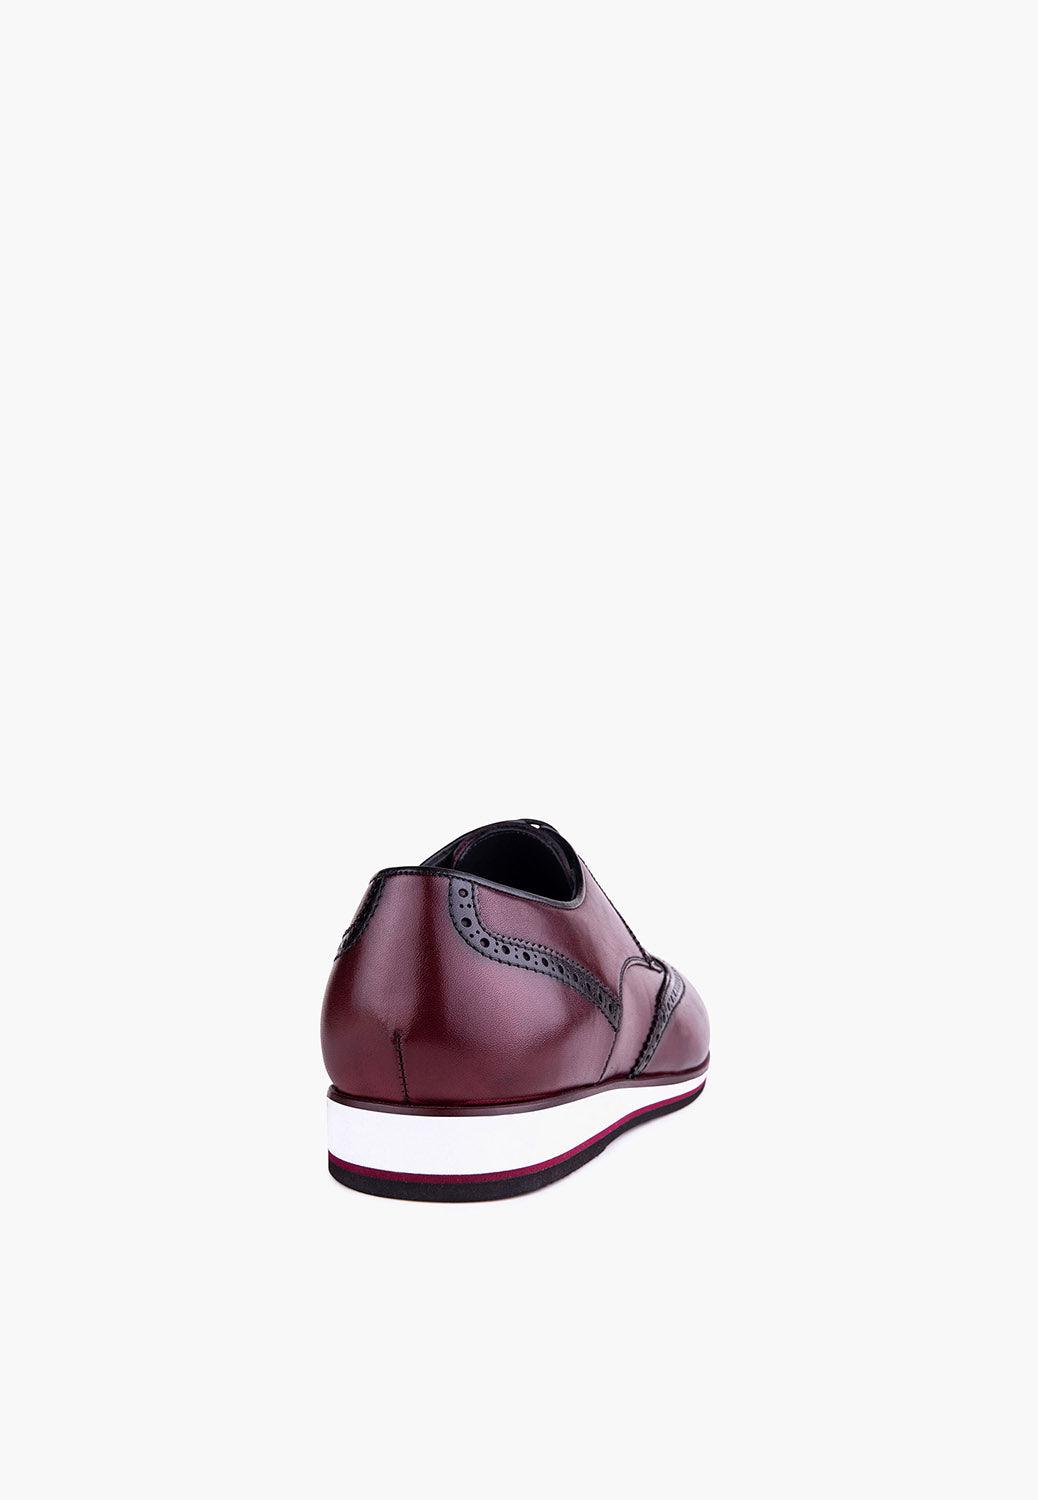 Milan Sneaker Burgundy - SEPOL Shoes